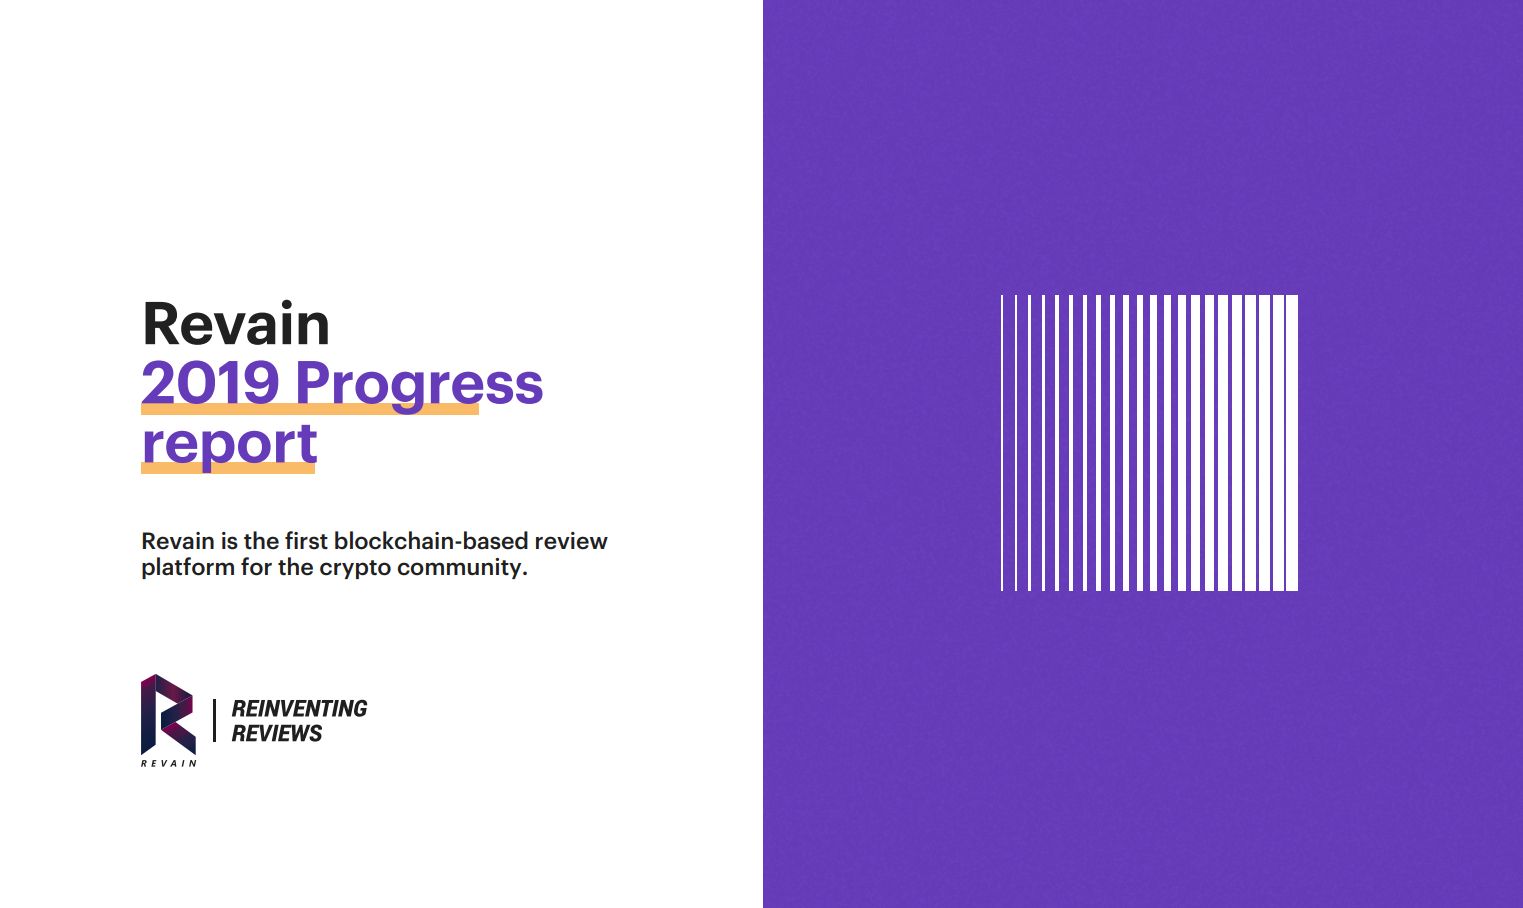 Revain Progress Report 2019